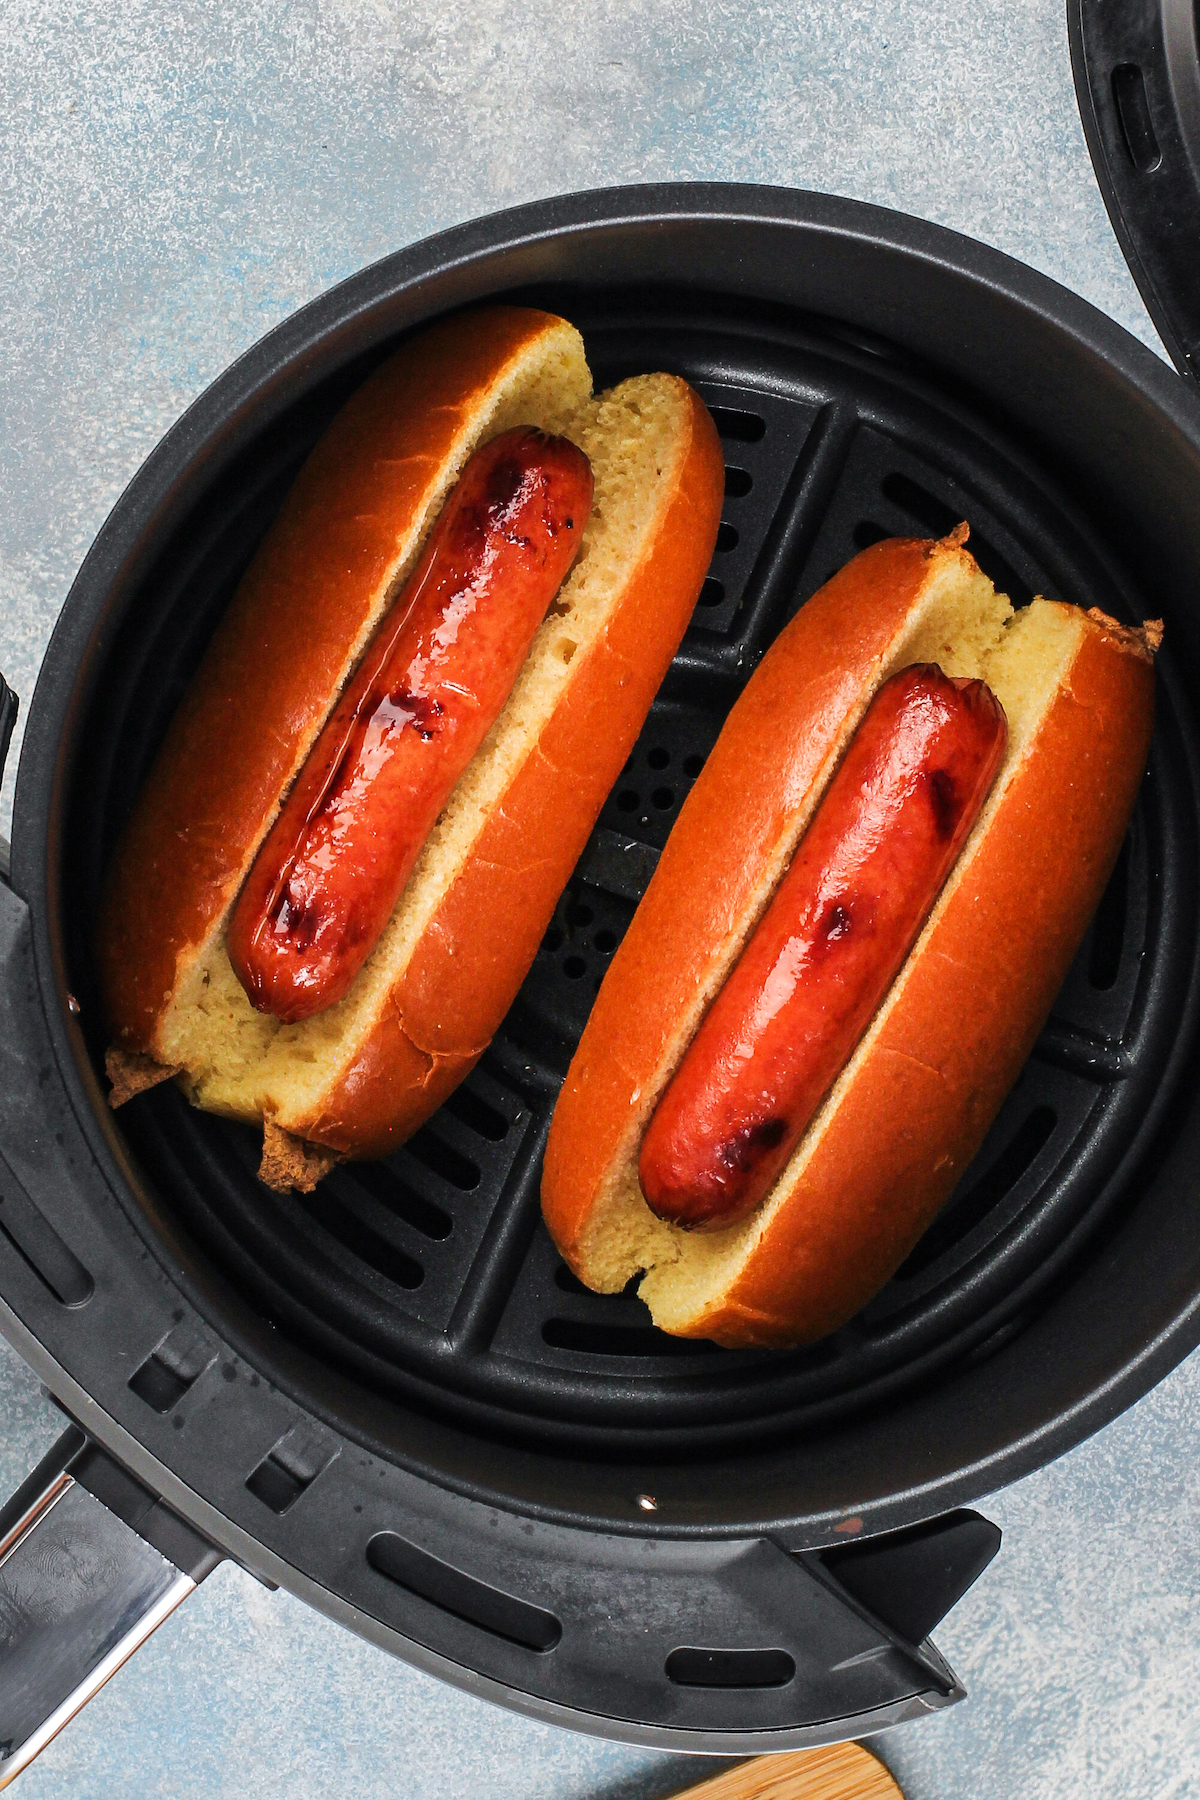 Hot dogs in buns inside an air fryer basket.